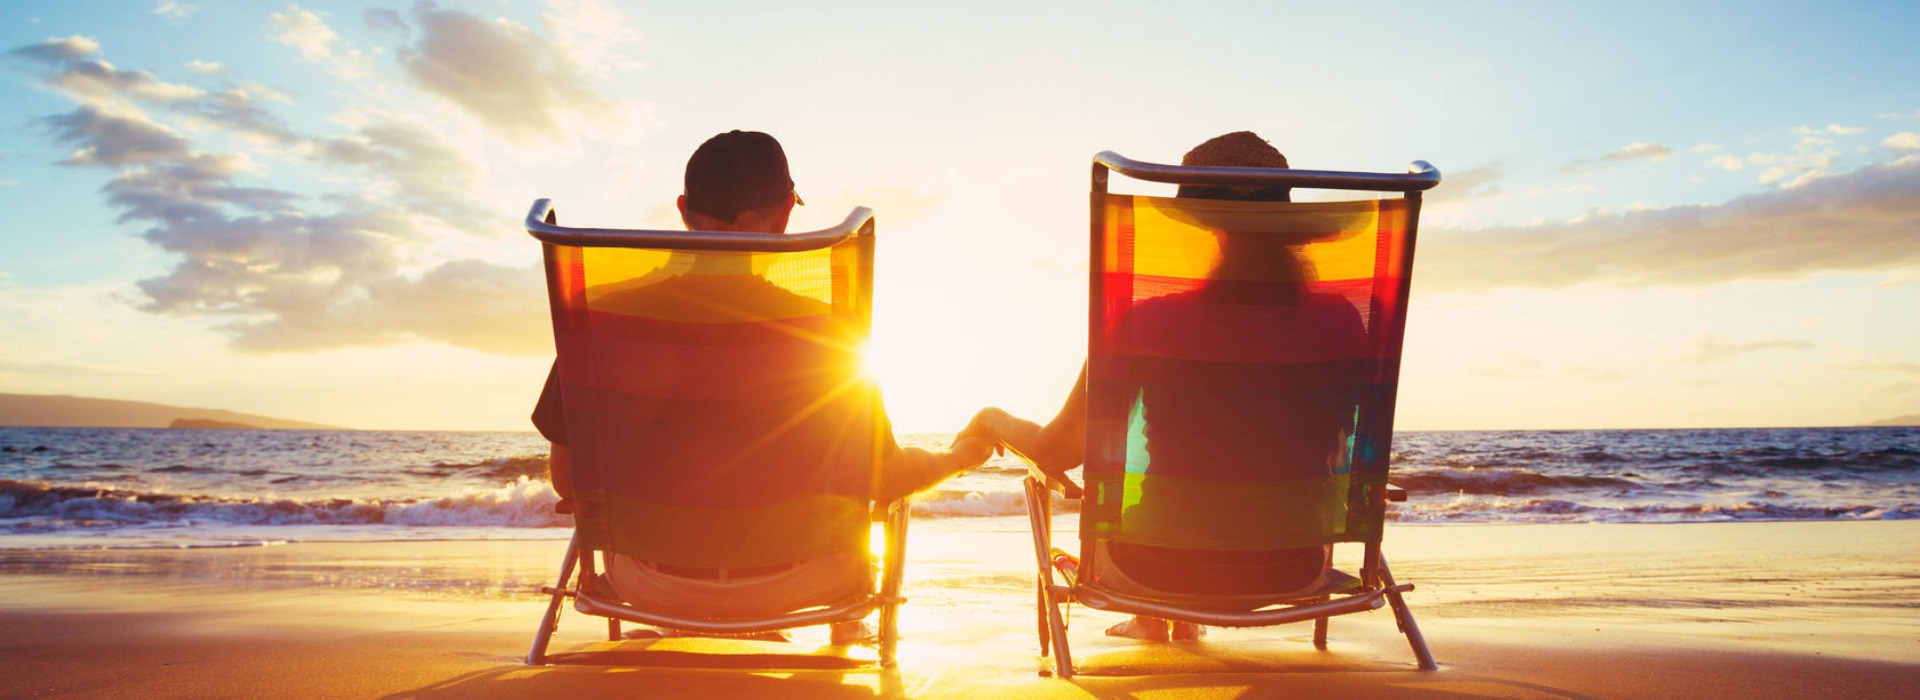 couple sitting on the beach| sarasota real estate florida